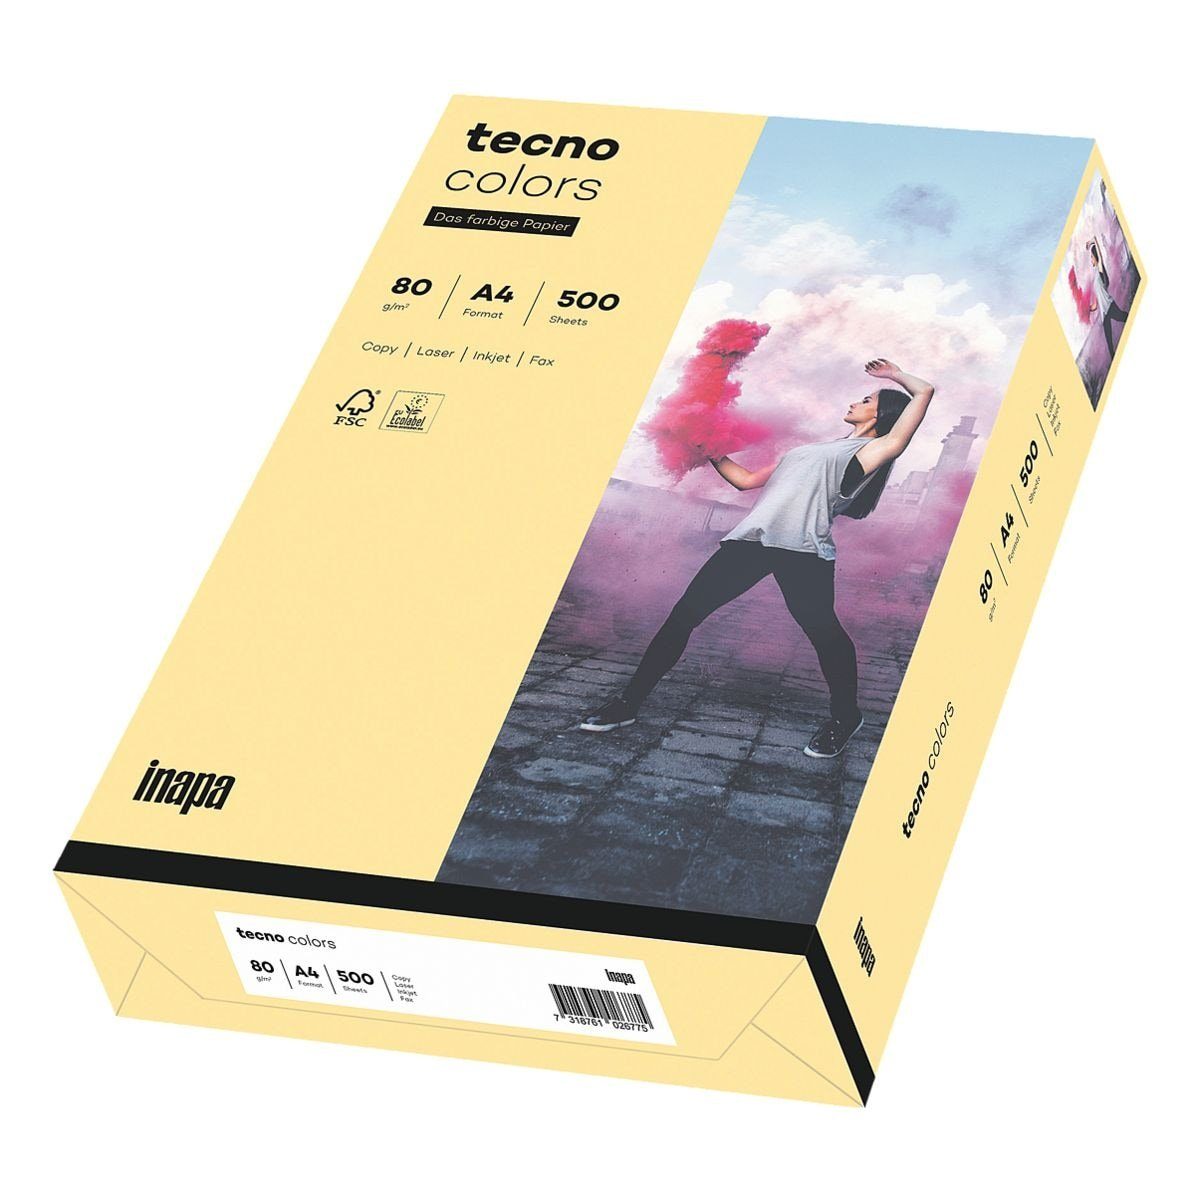 Inapa tecno Drucker- und Kopierpapier Rainbow / tecno Colors, Pastellfarben, Format DIN A4, 80 g/m², 500 Blatt chamois